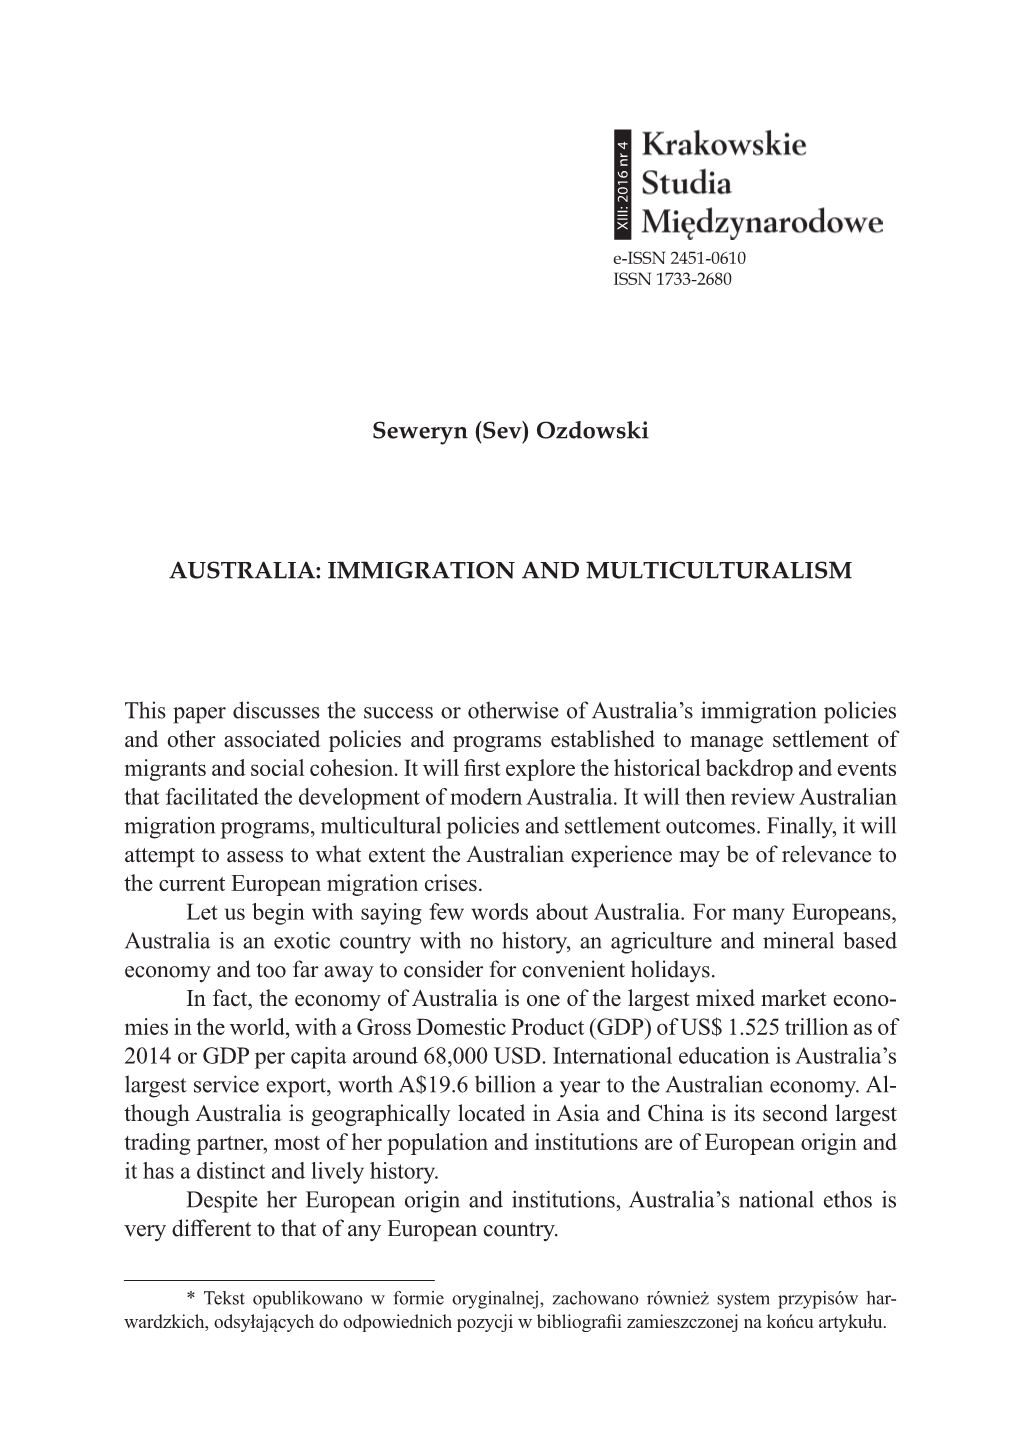 Australia: Immigration and Multiculturalism